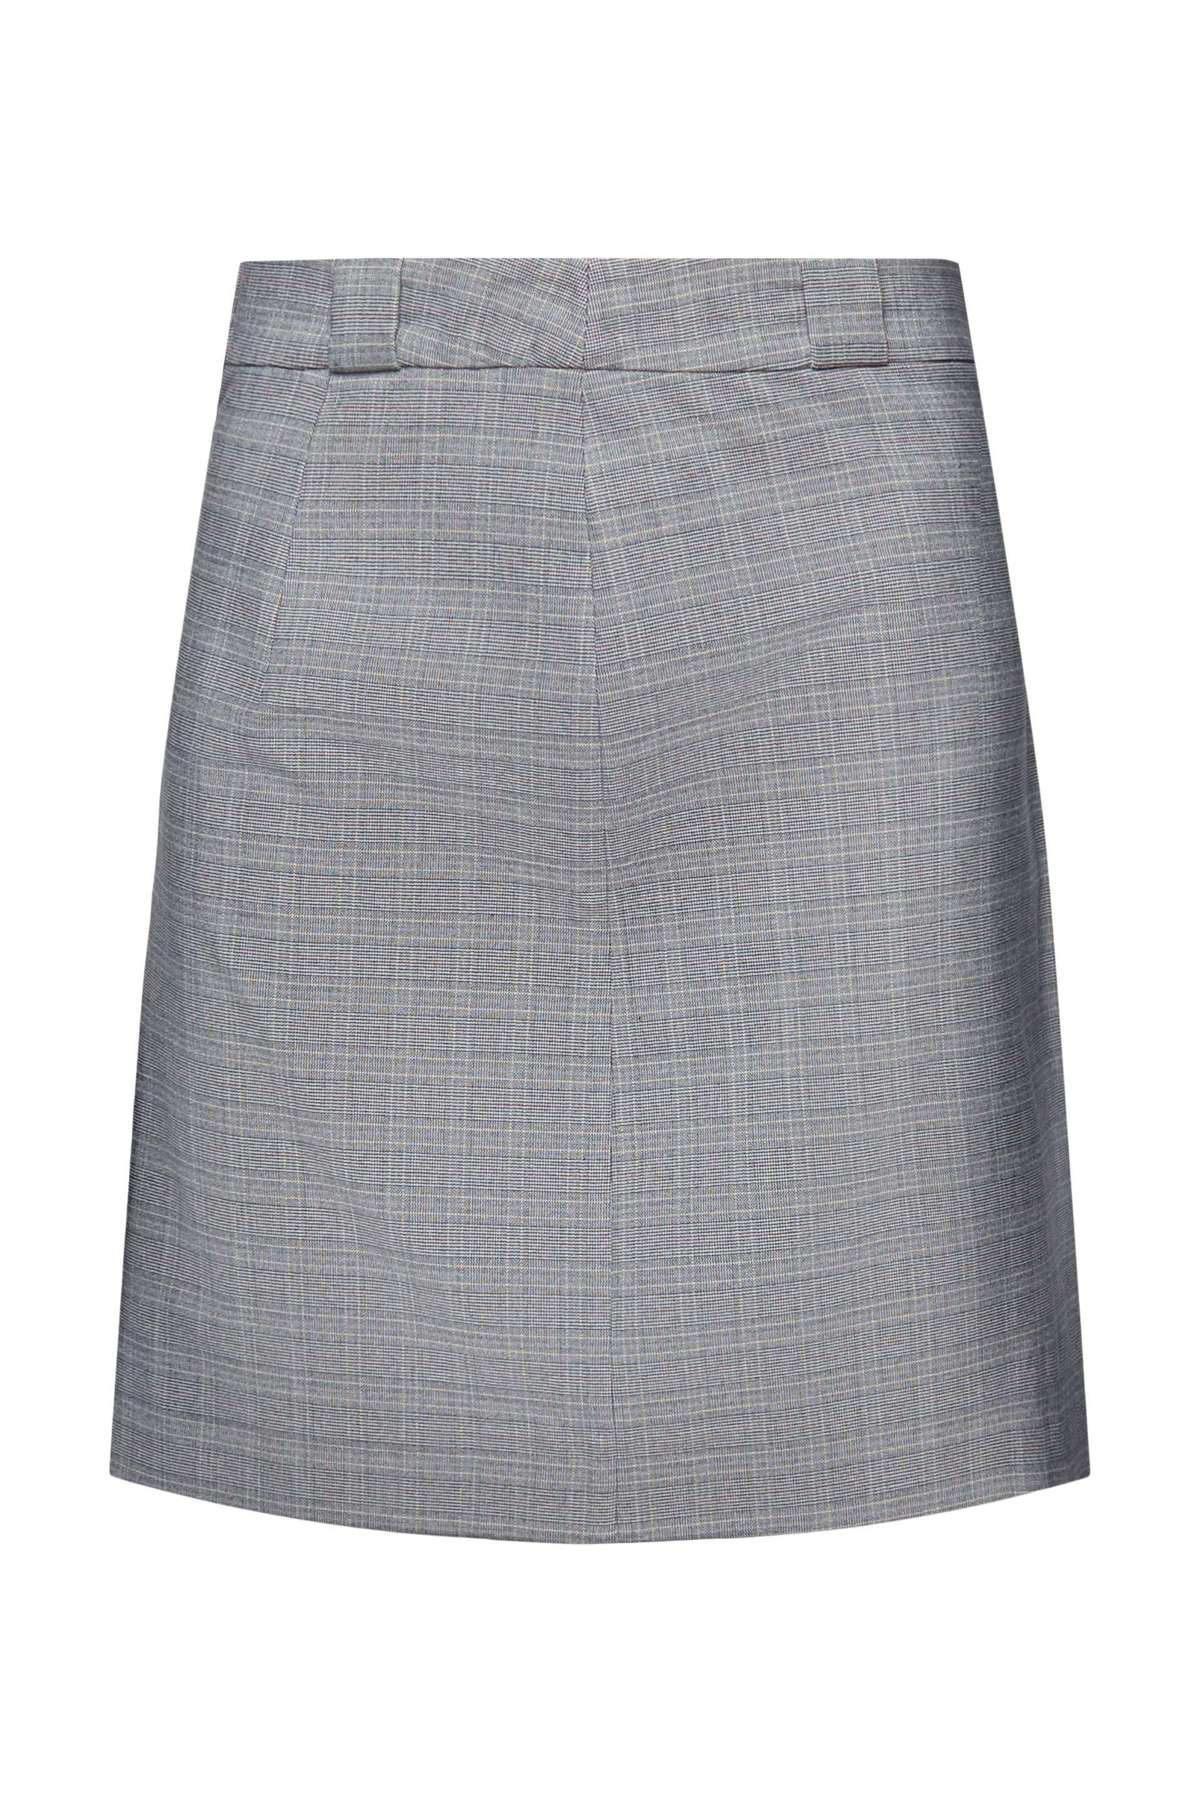 Коллекция Miniskirt Mix & Match: мини-юбка со складками и клетчатым узором